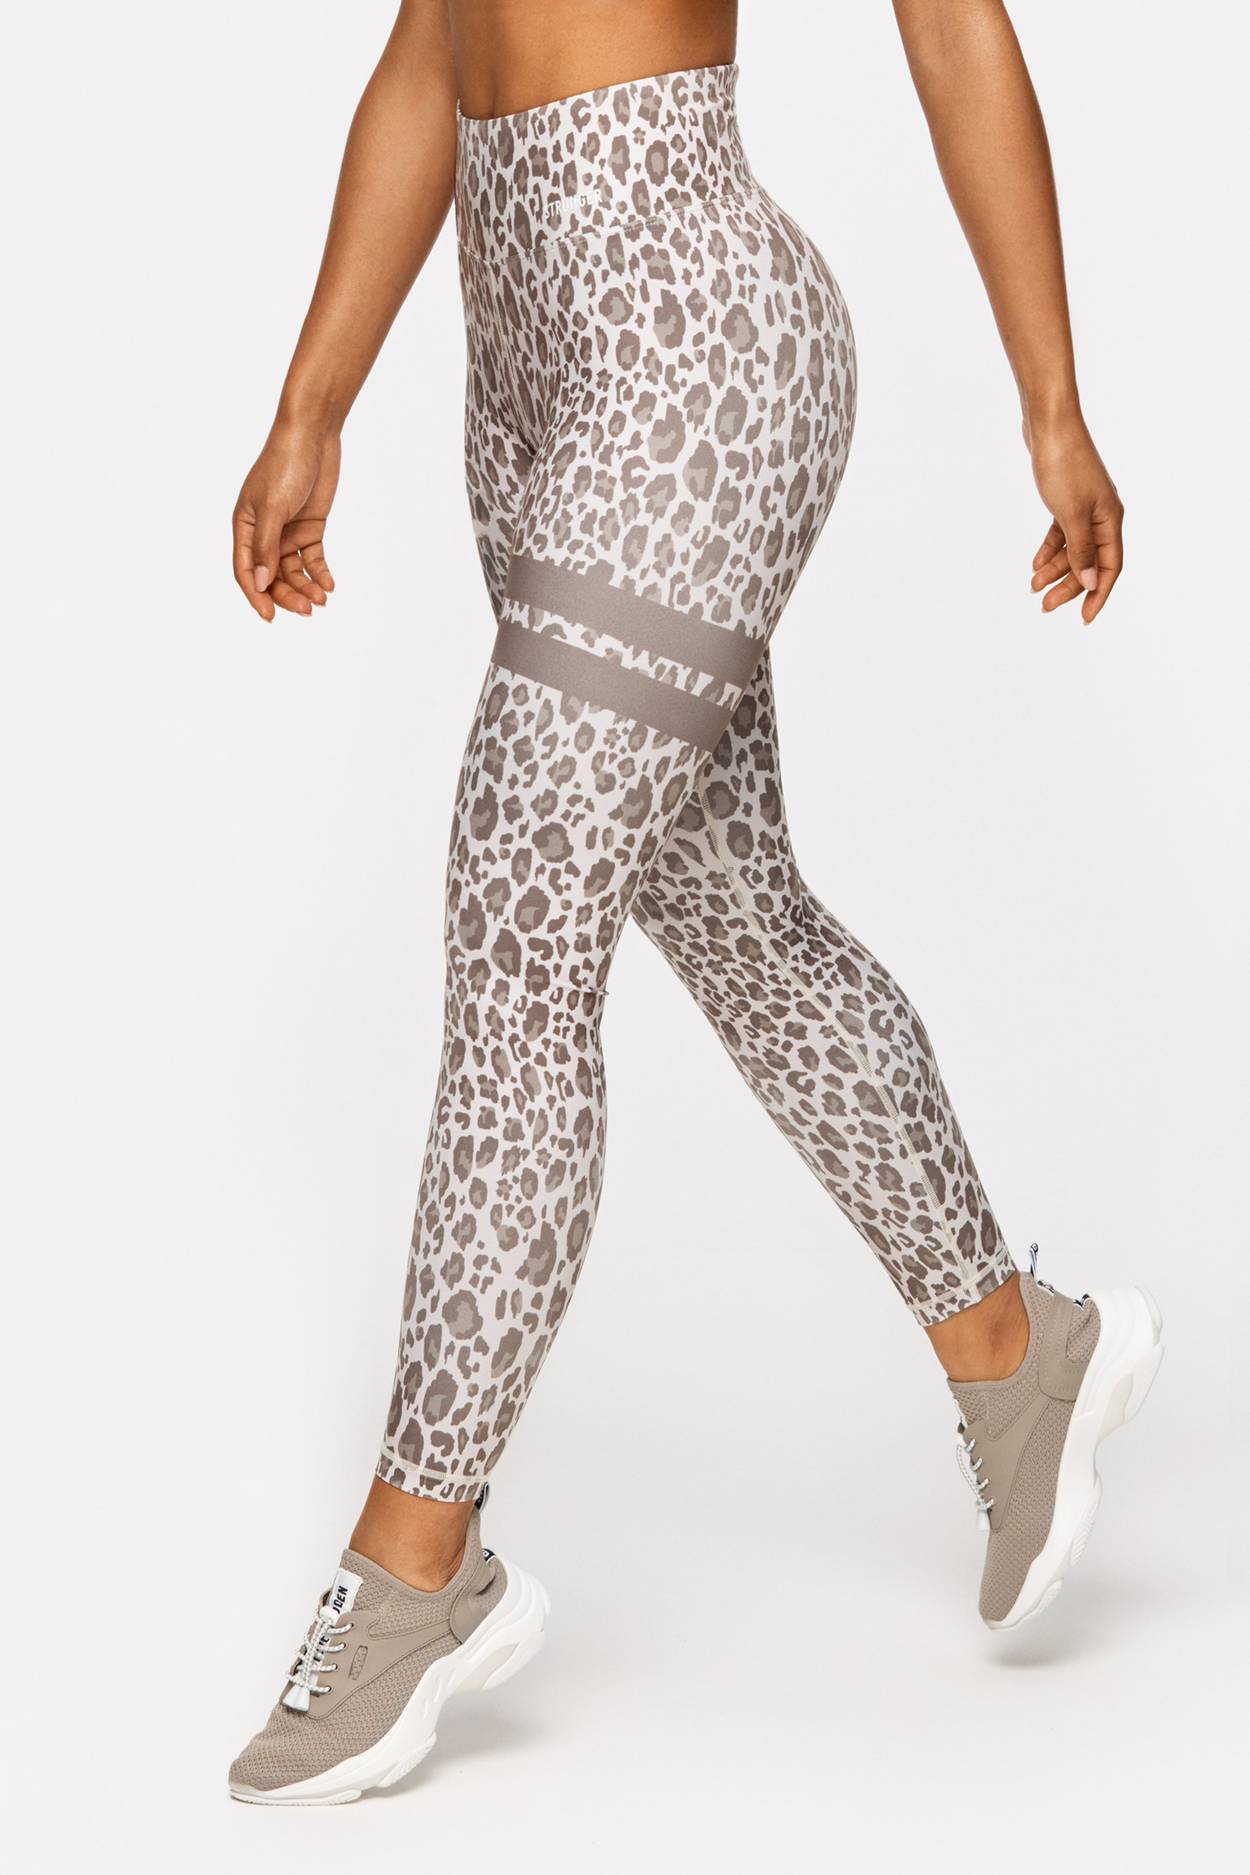 ZYIA Active Snow Leopard Print Brilliant Pocket 7/8 Leggings Size 14-16  White 